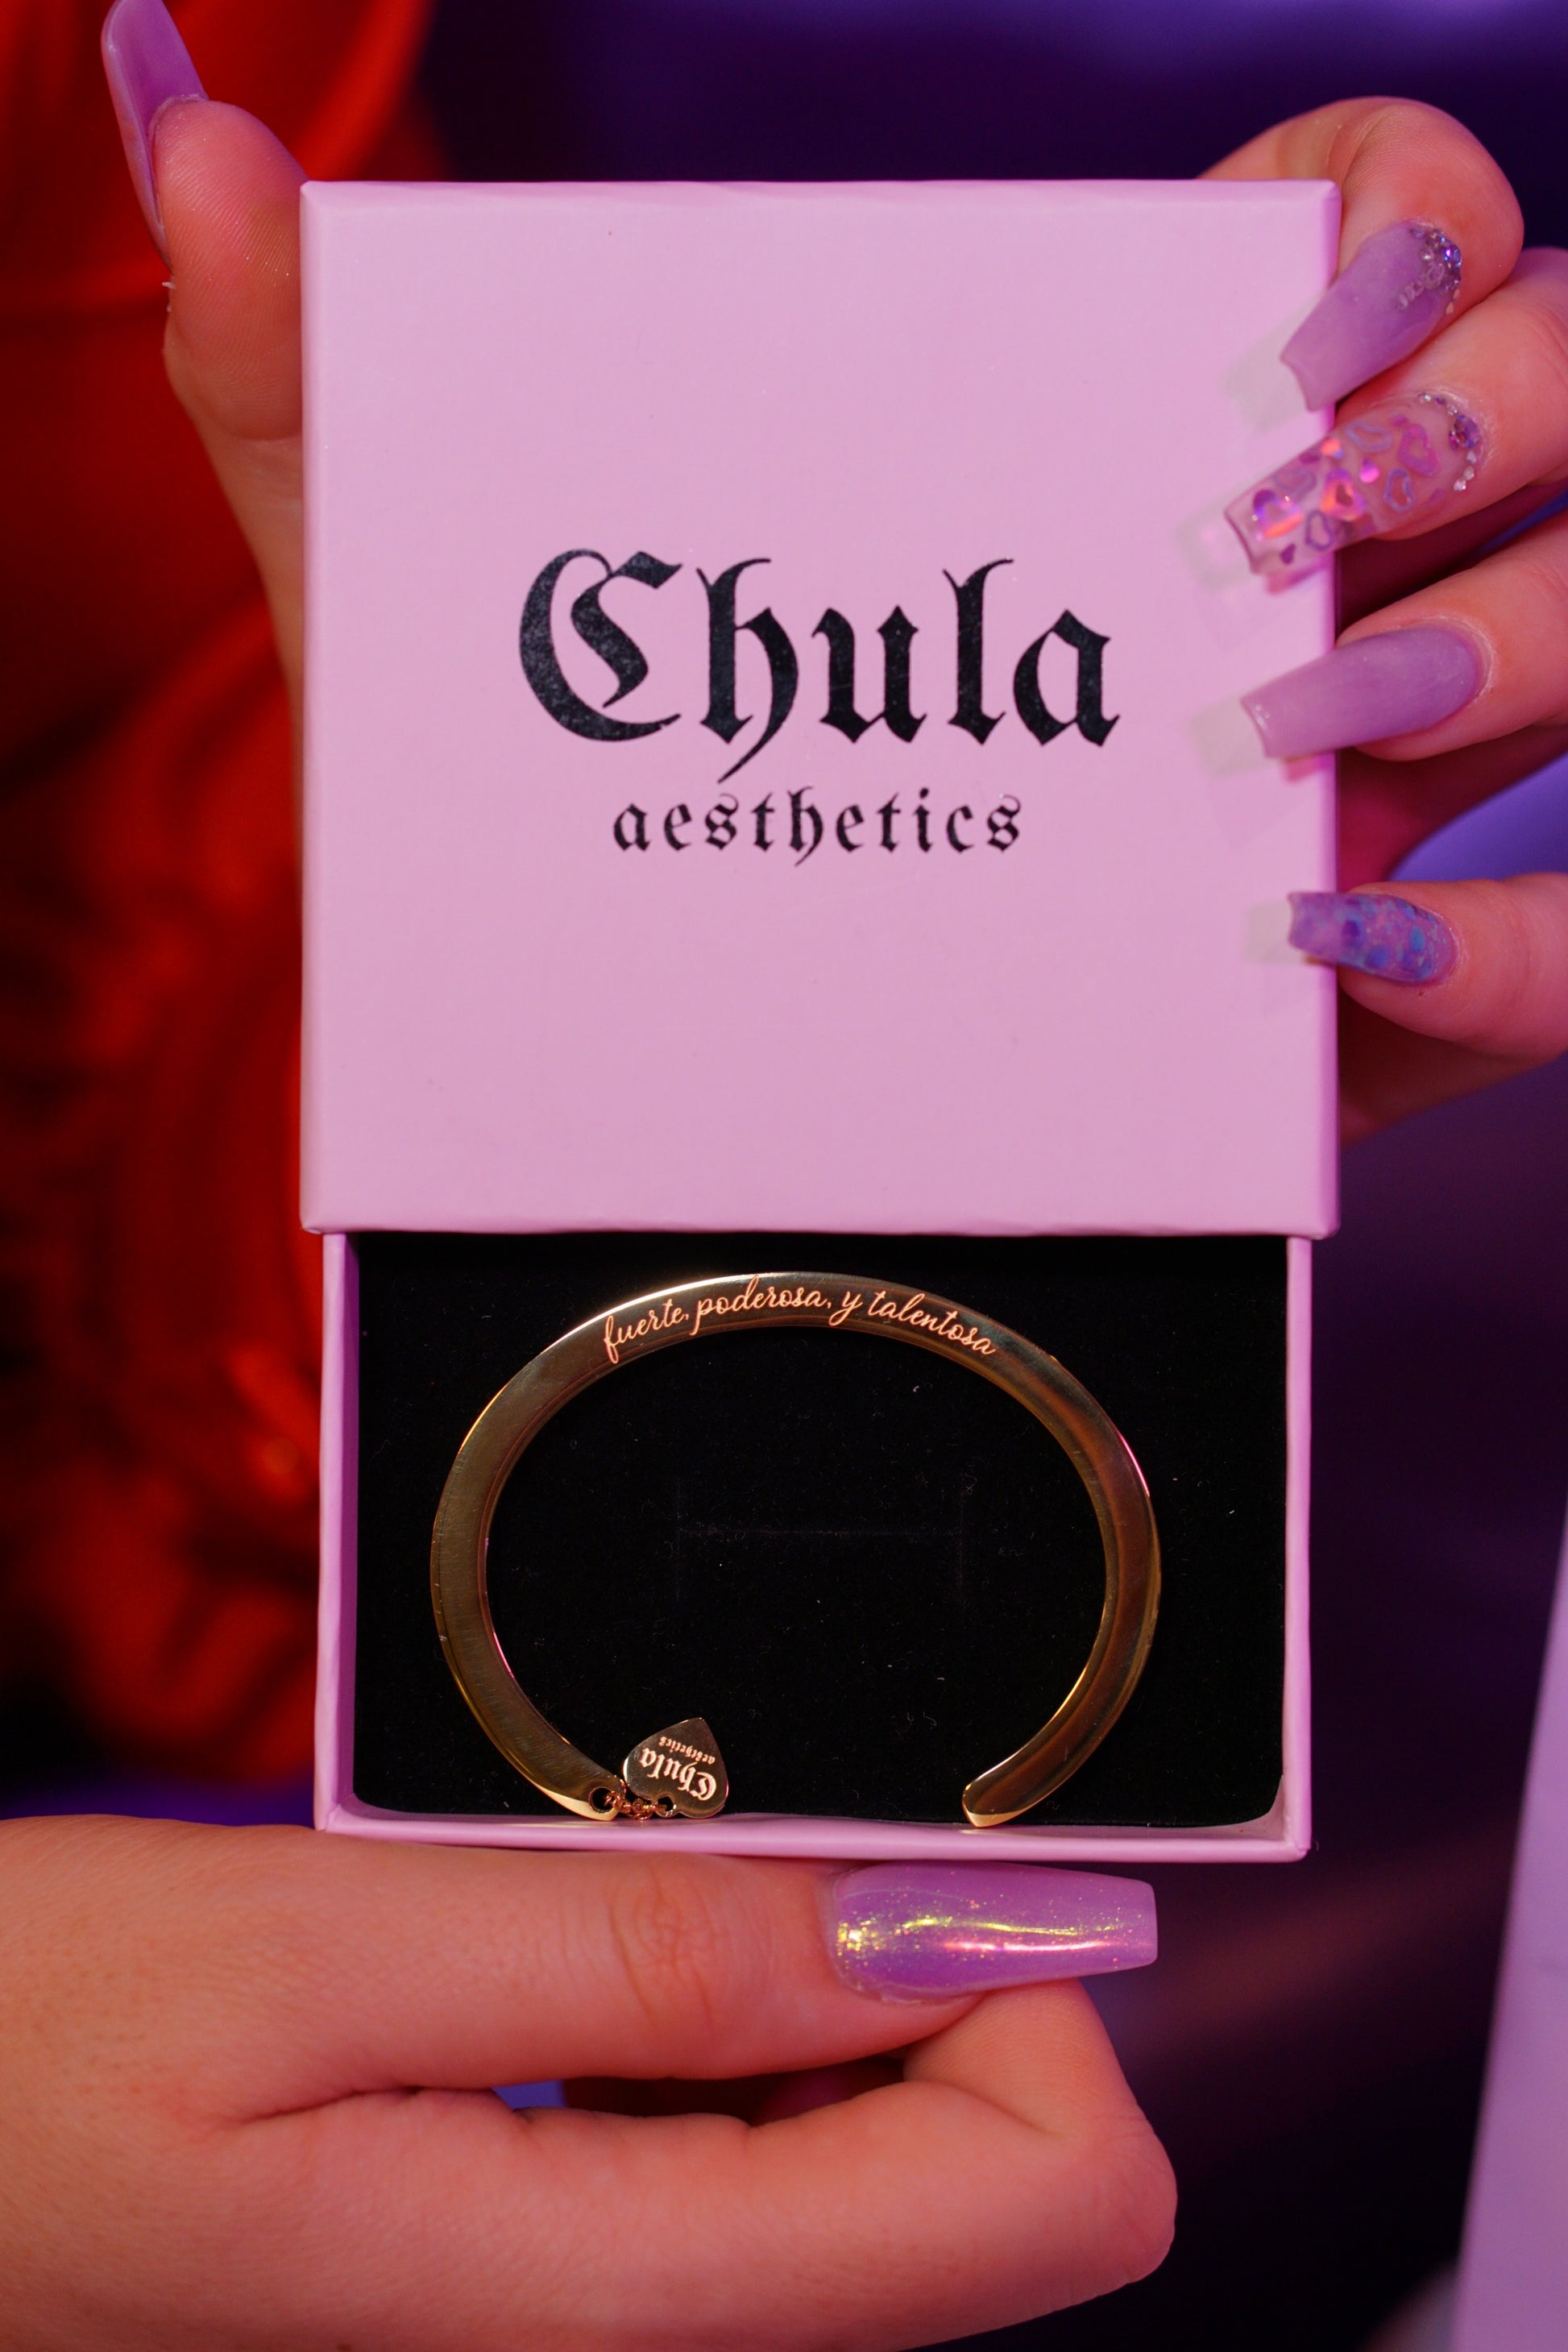 affirmation bangles in spanish. affirmation bracelet. affirmation bracelet in a jewelry box.